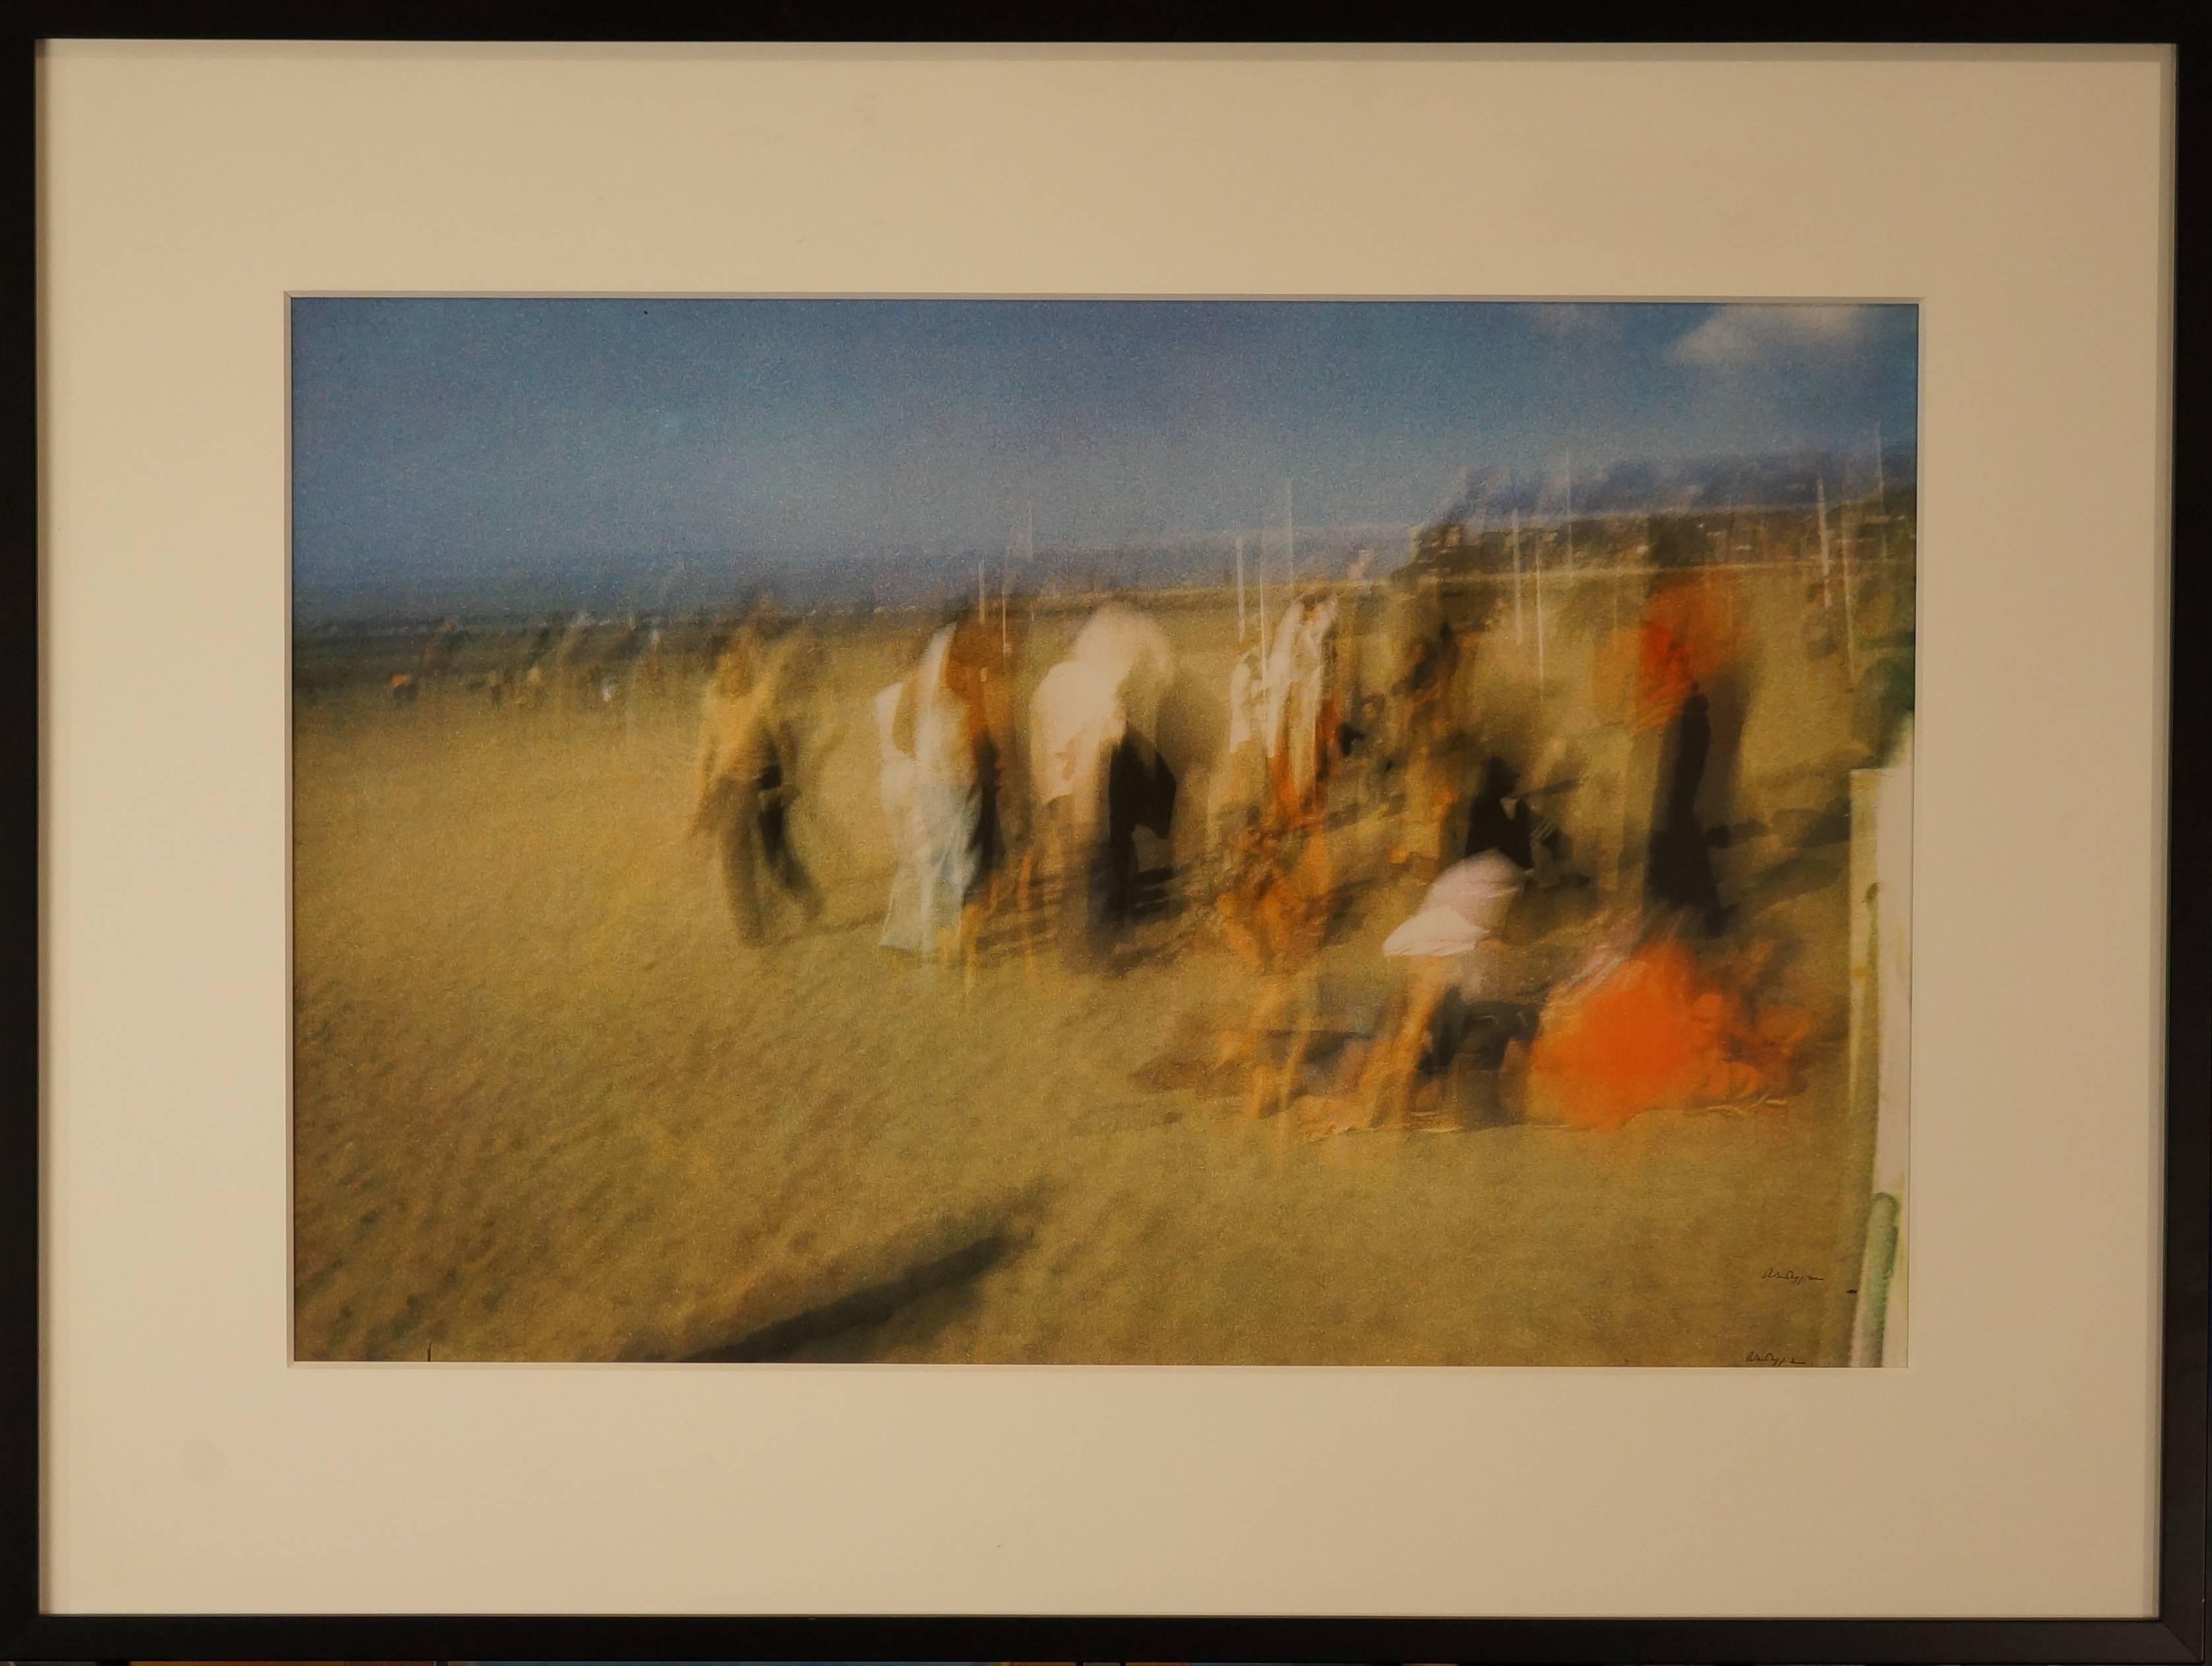 Abstract Print André Naggar - Composition photographique abstraite II, 1980, photographie, 62 x82 cm, encadrée